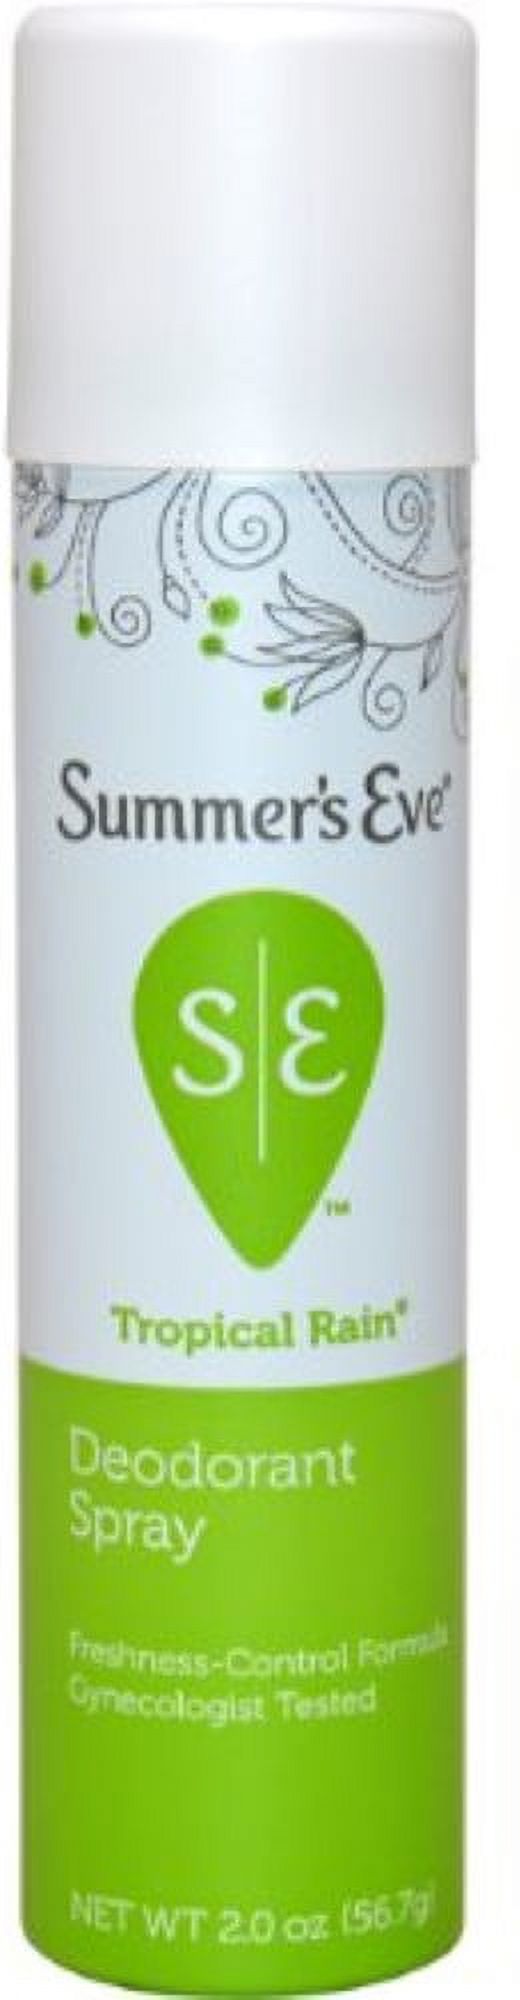 Summer's Eve Feminine Deodorant Spray, Tropical Rain, 2 oz (Pack of 6) - image 1 of 2